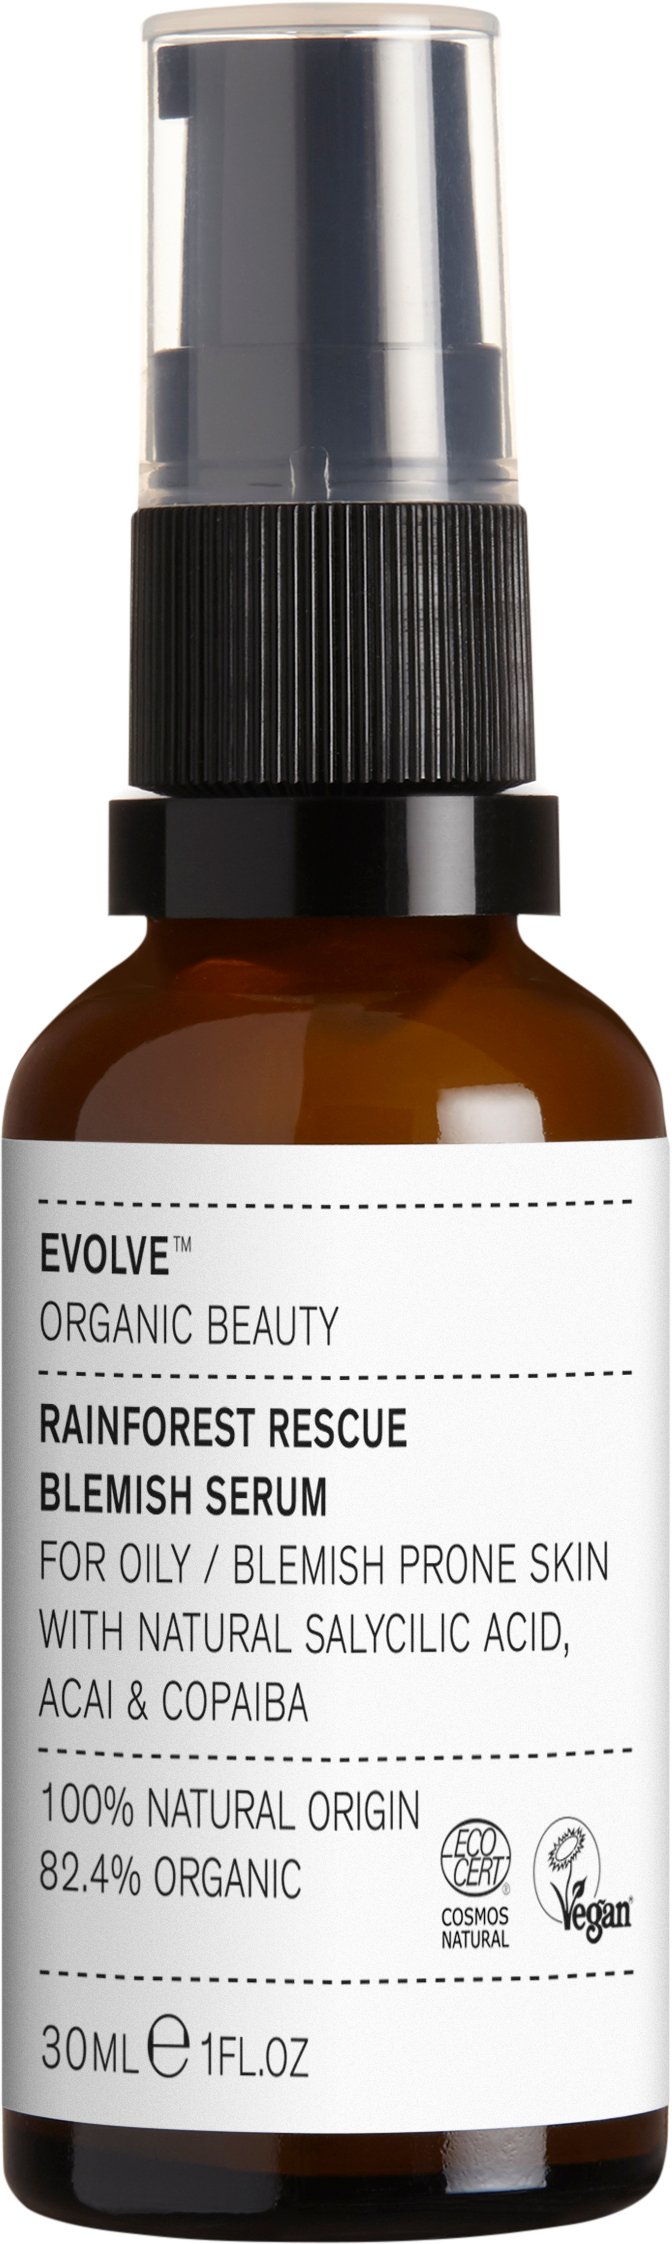 Evolve Organic Beauty Rainforest Rescue Blemish Serum 30 ml